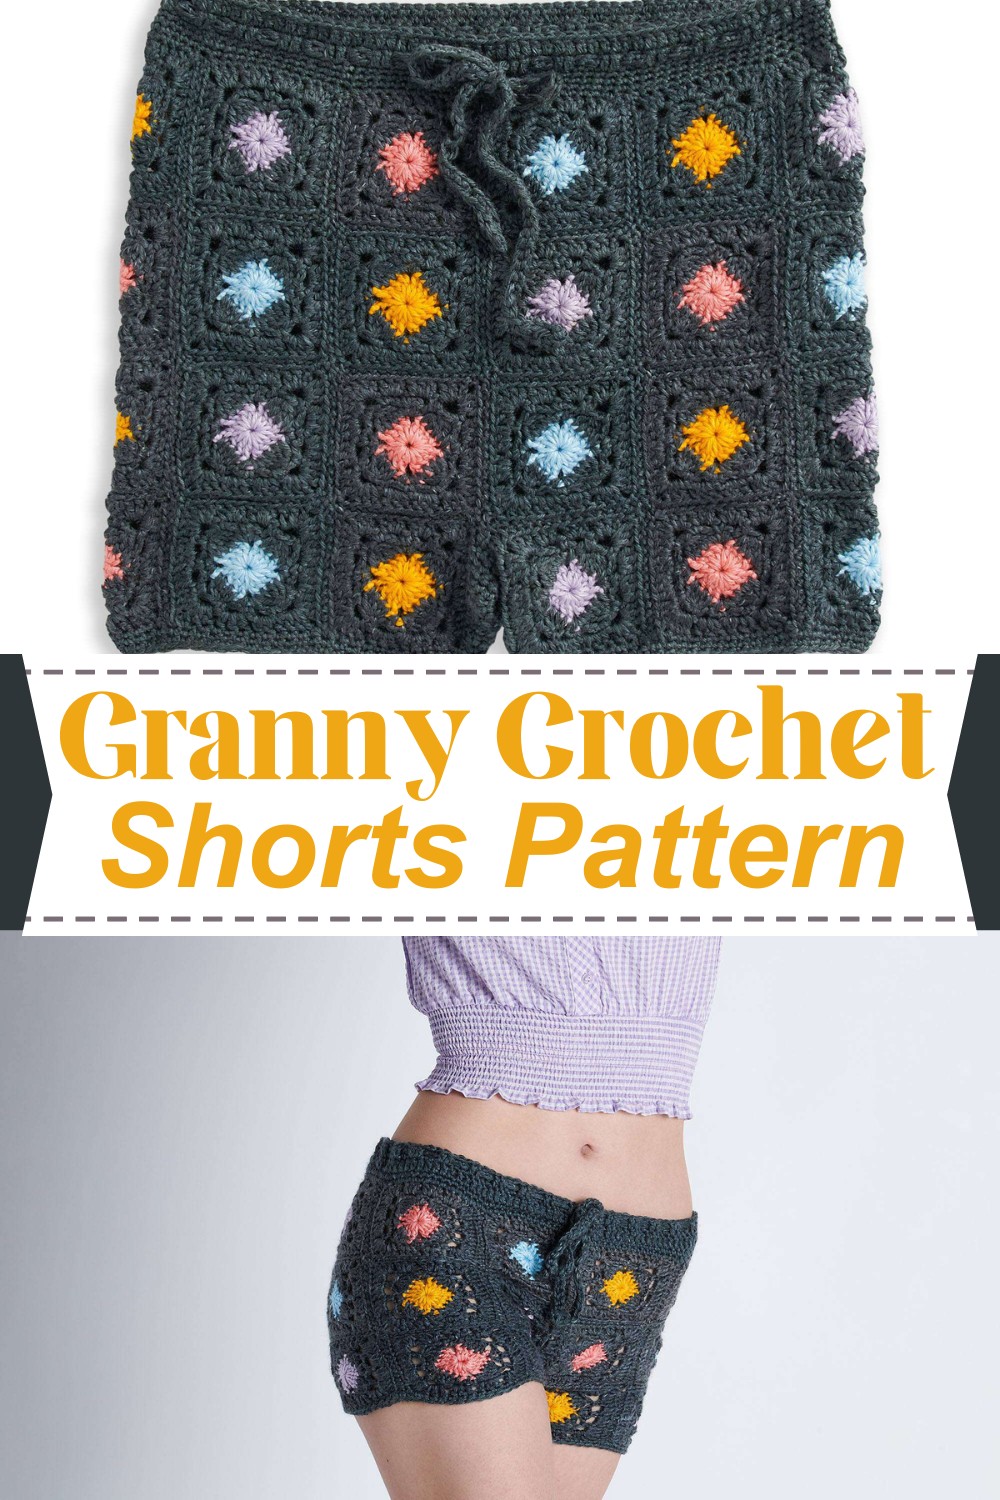 Granny Crochet Shorts Pattern